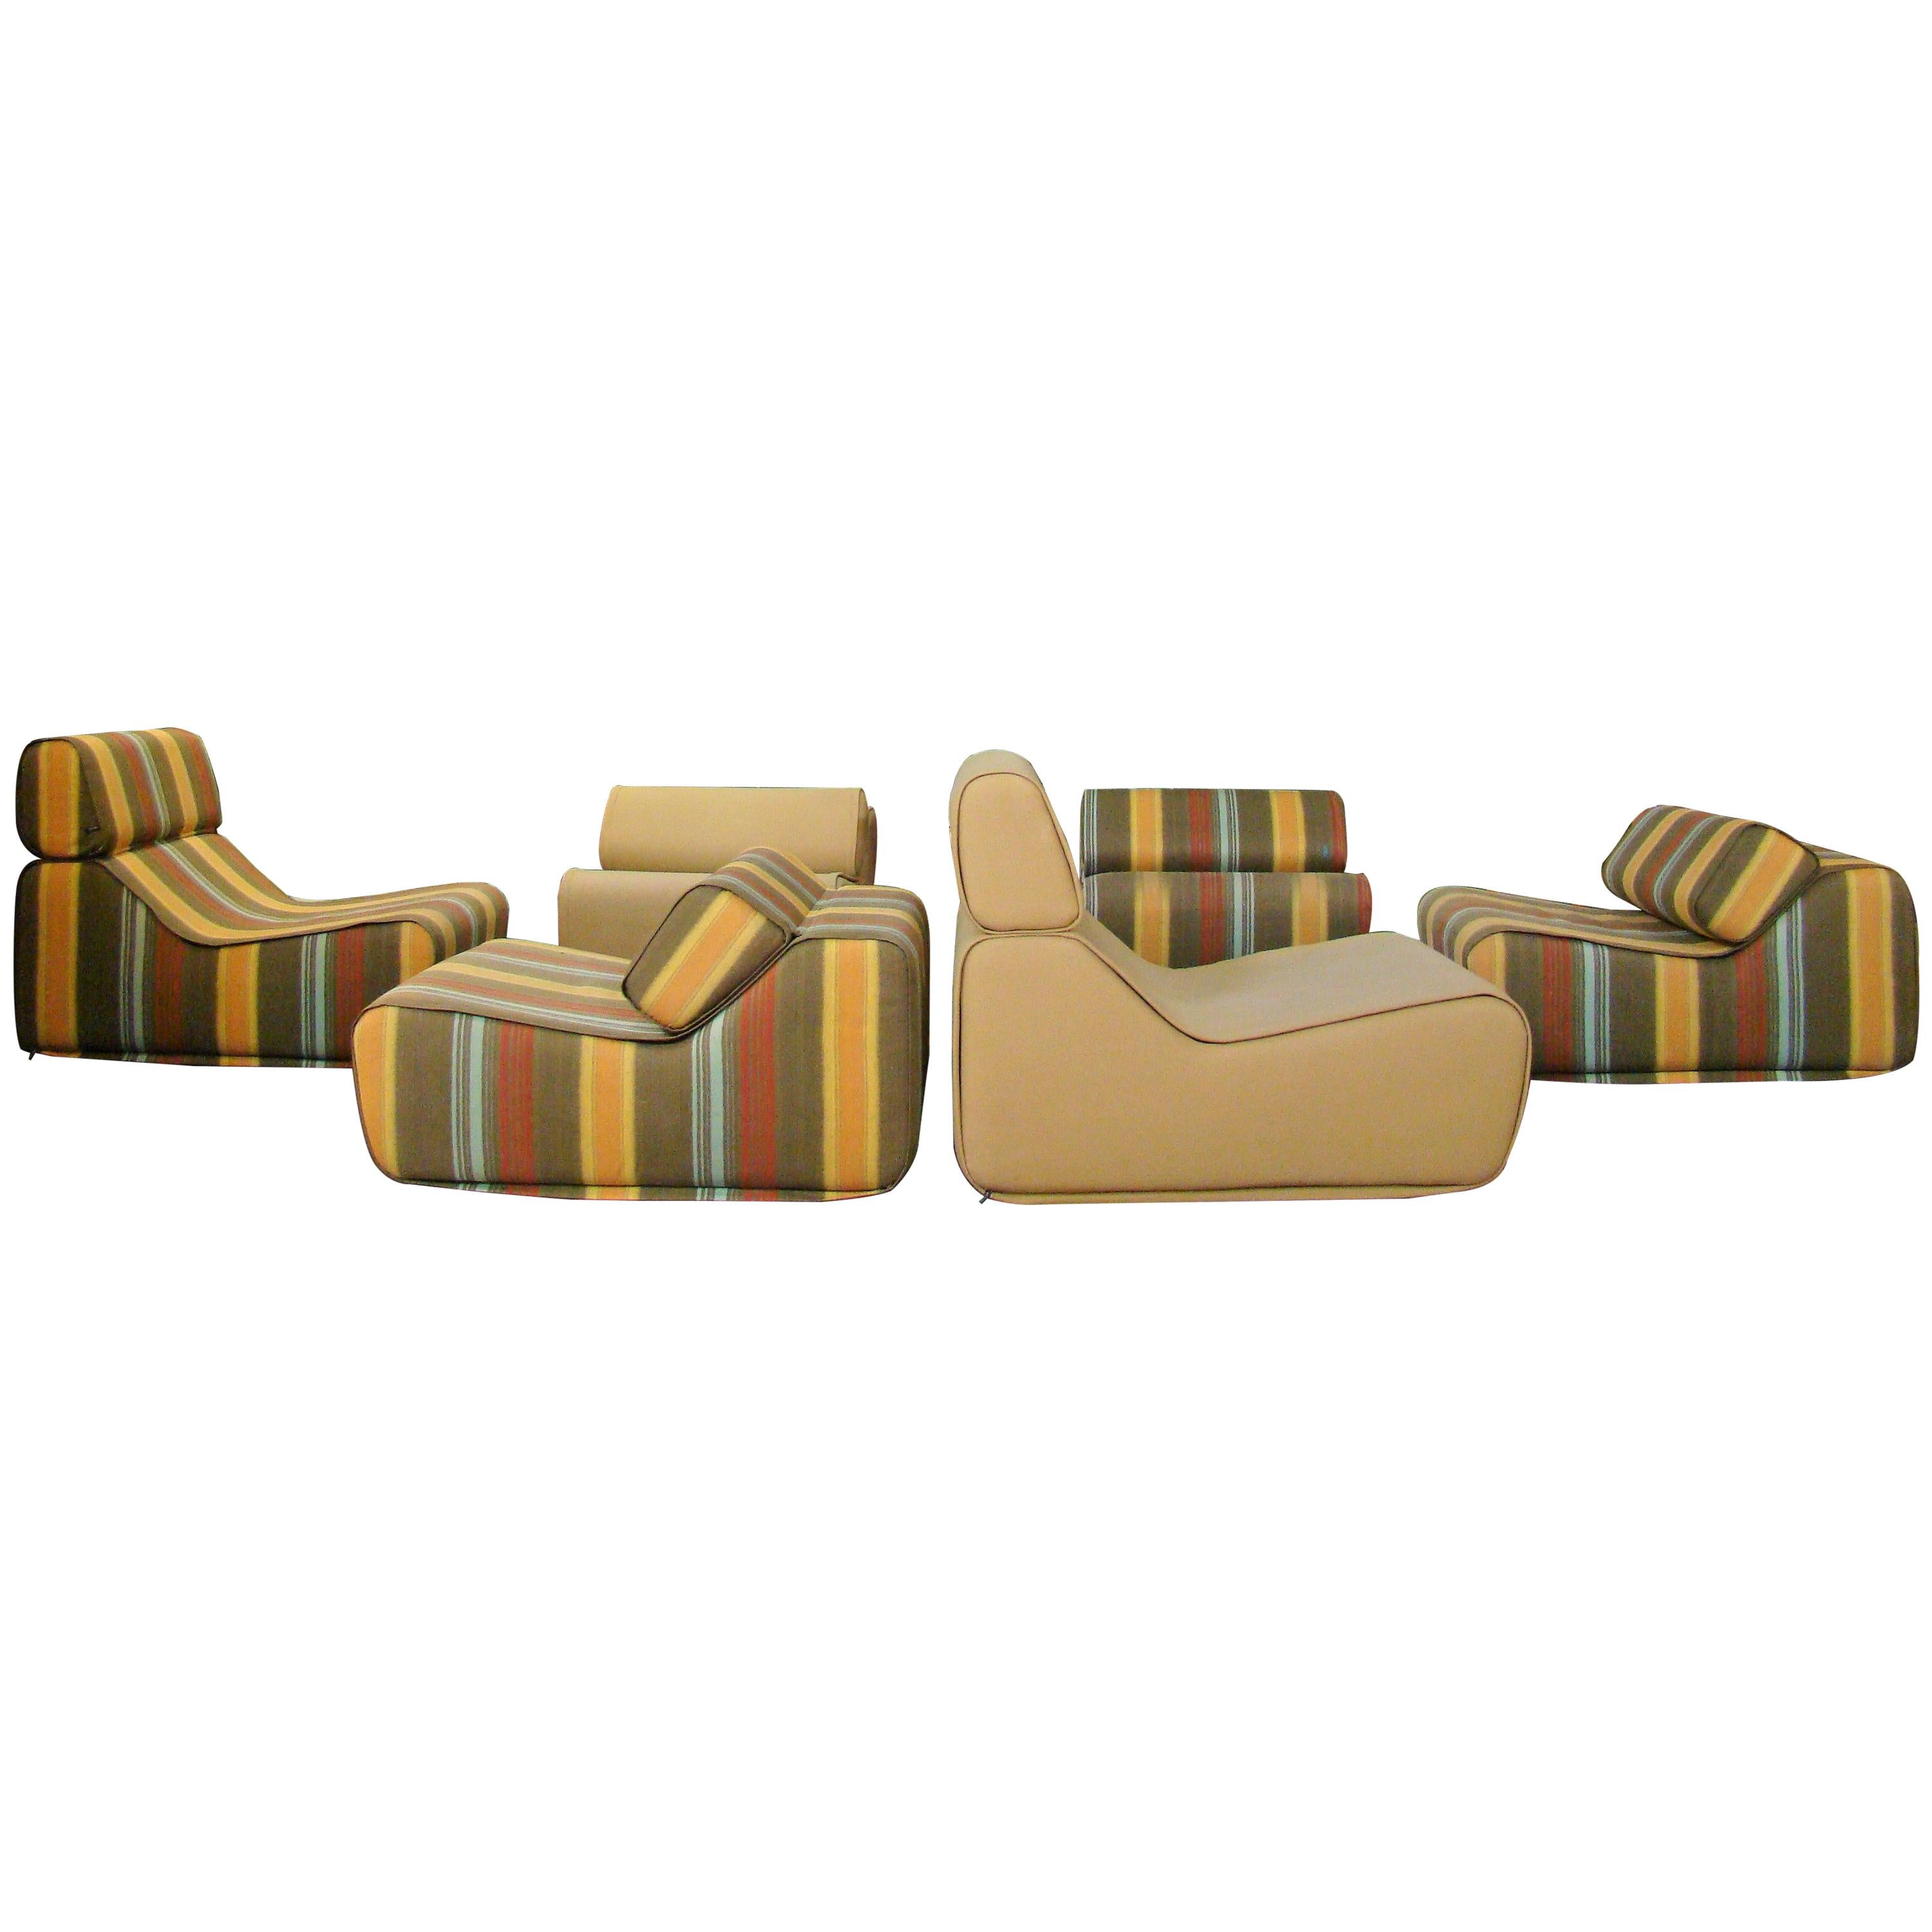 Moroso "Transform" Modular Seating by Numen Design Group ‘Multi-Color Stripe’